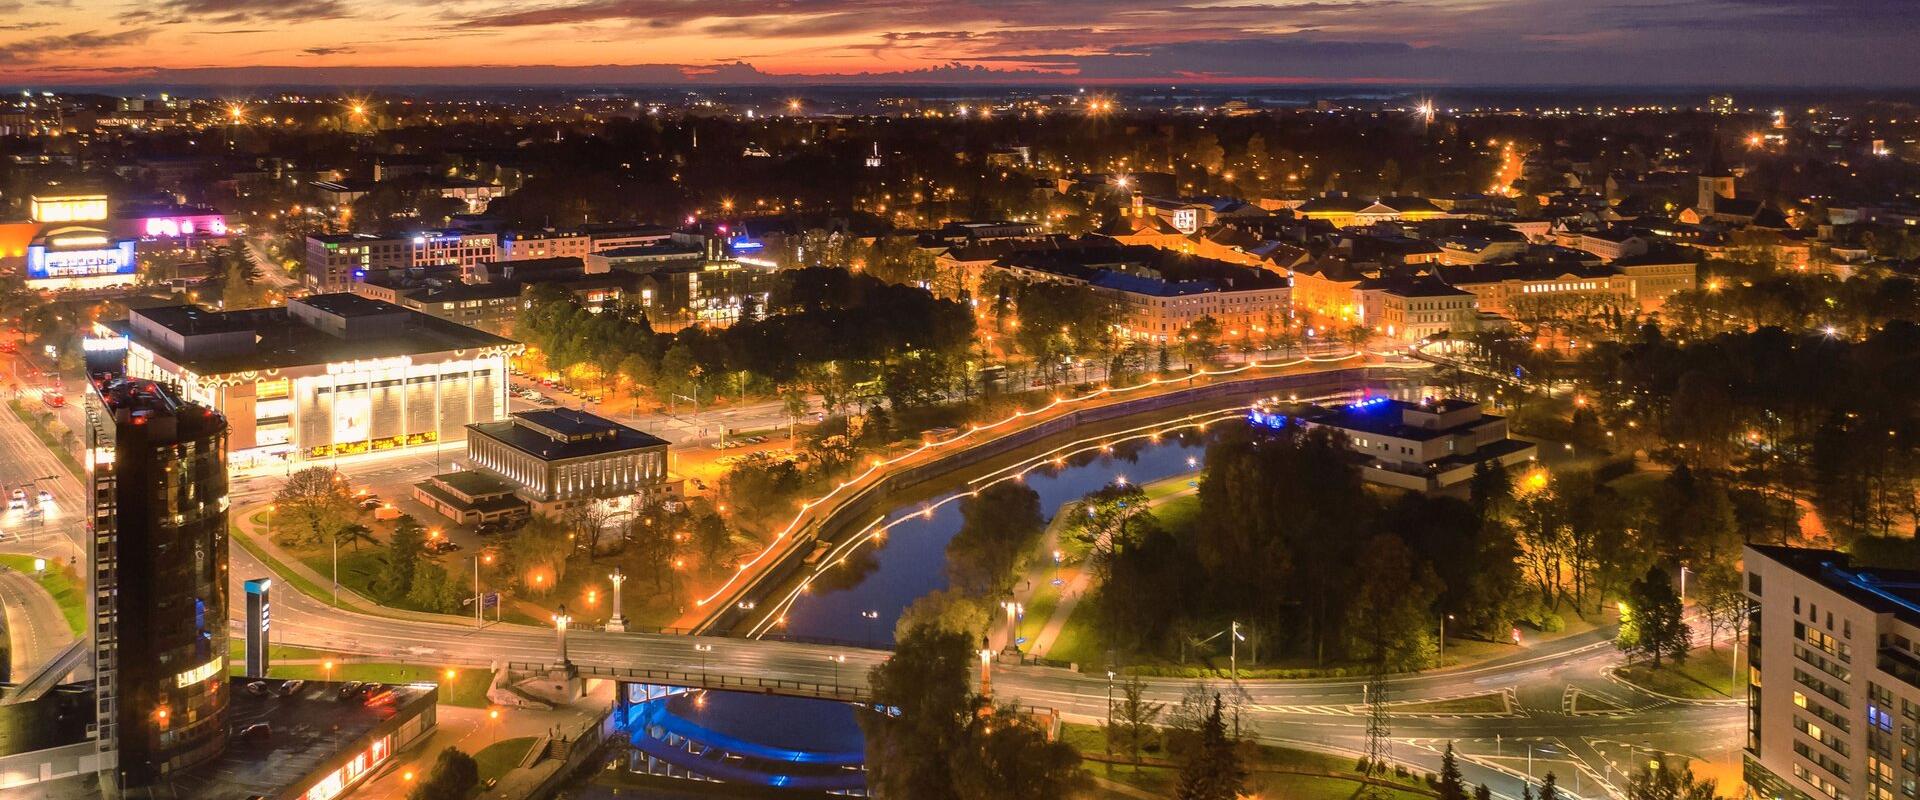 Ülejõe Promenade and Tartu in the evening